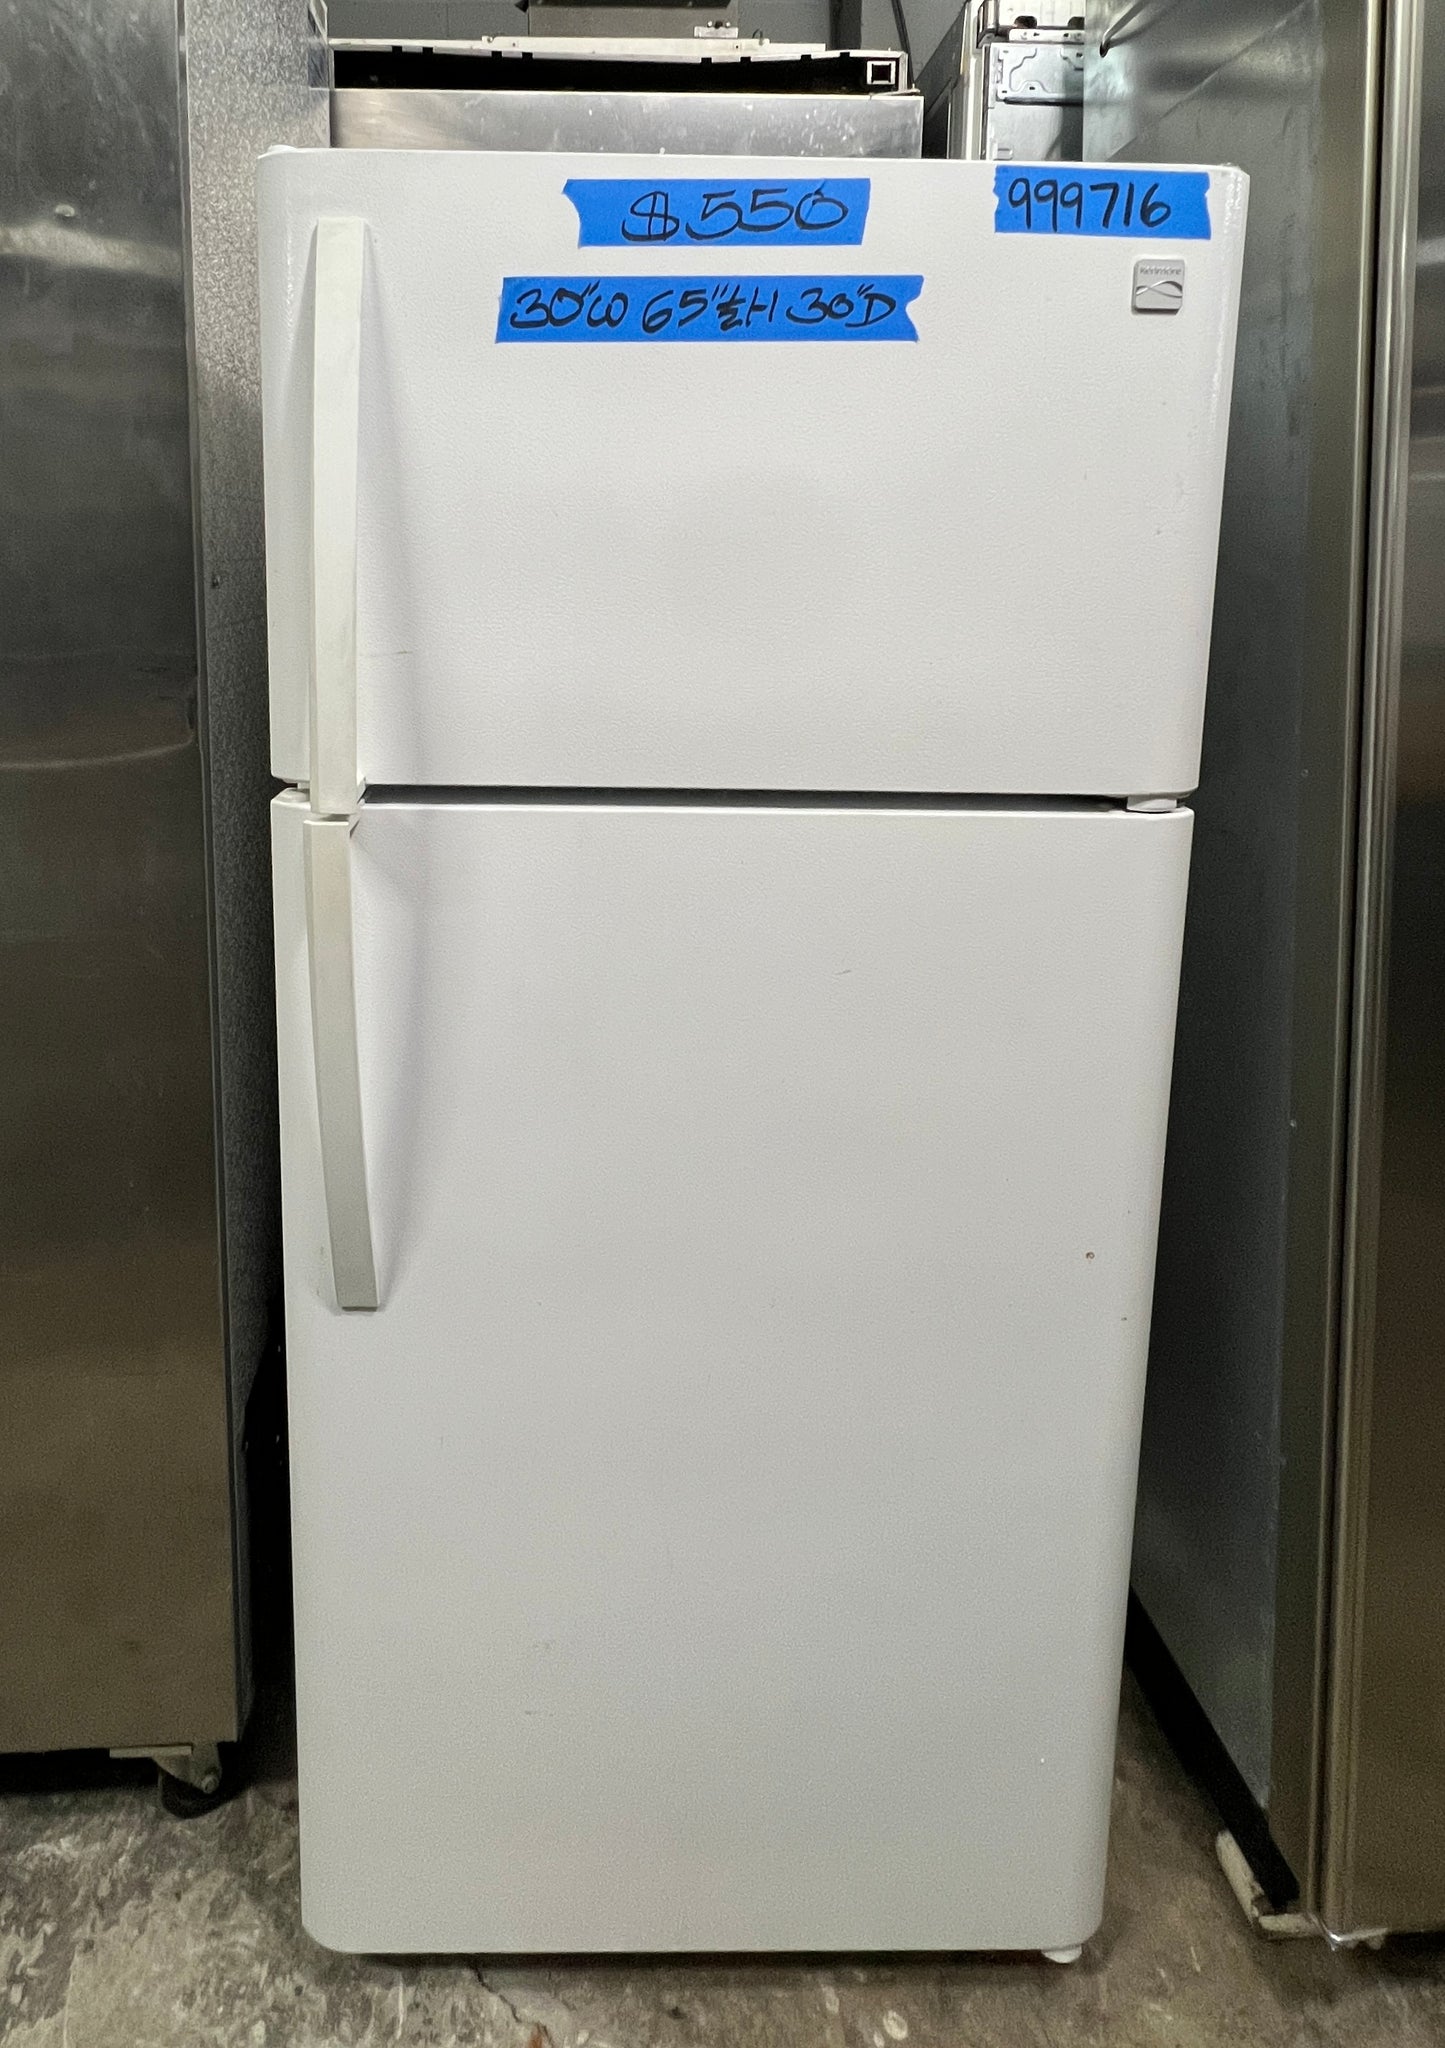 Kenmore 30 Top Freezer Refrigerator In white, 253.68882014, 999716